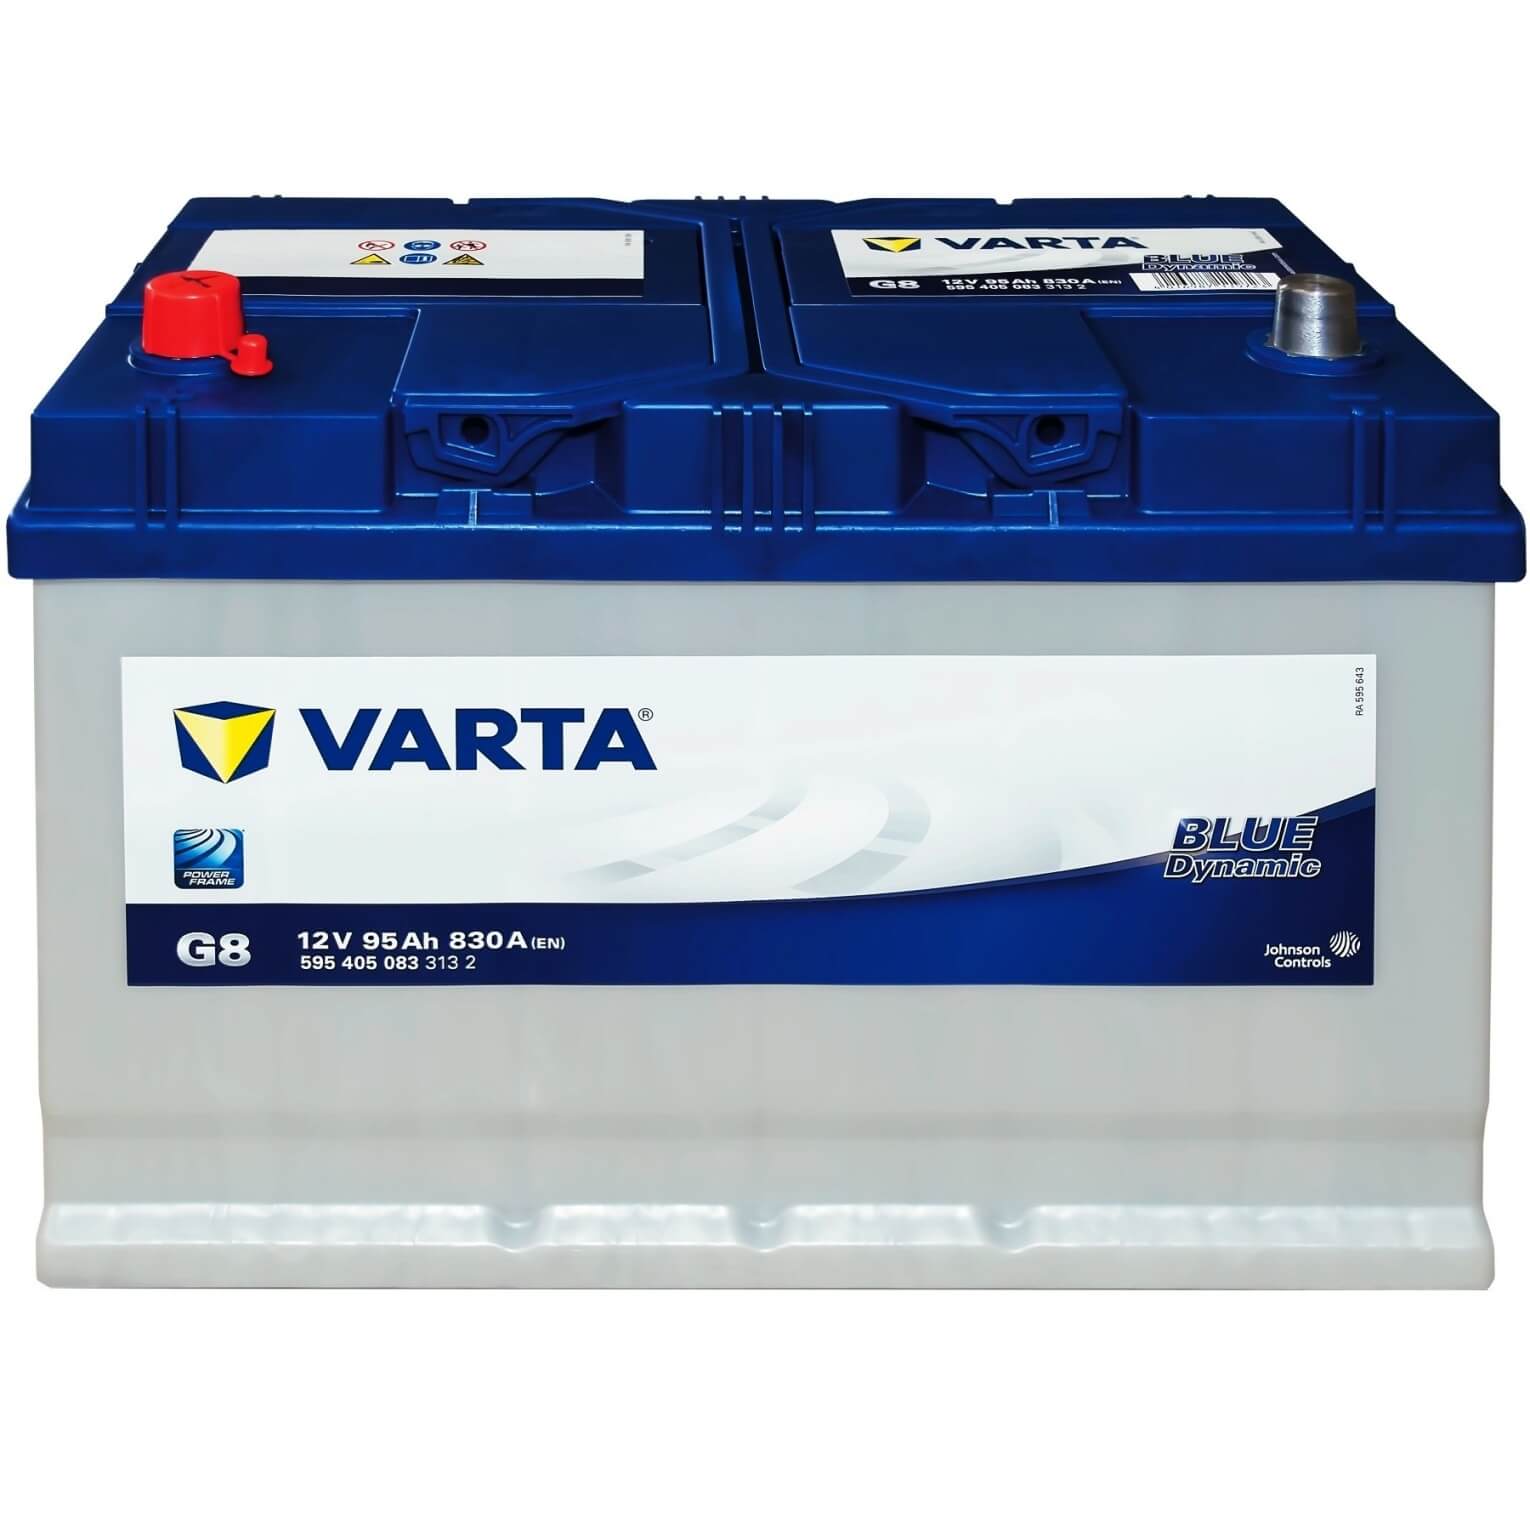 Varta G8 Autobatterie ASIA 12V 95Ah 5954050833132